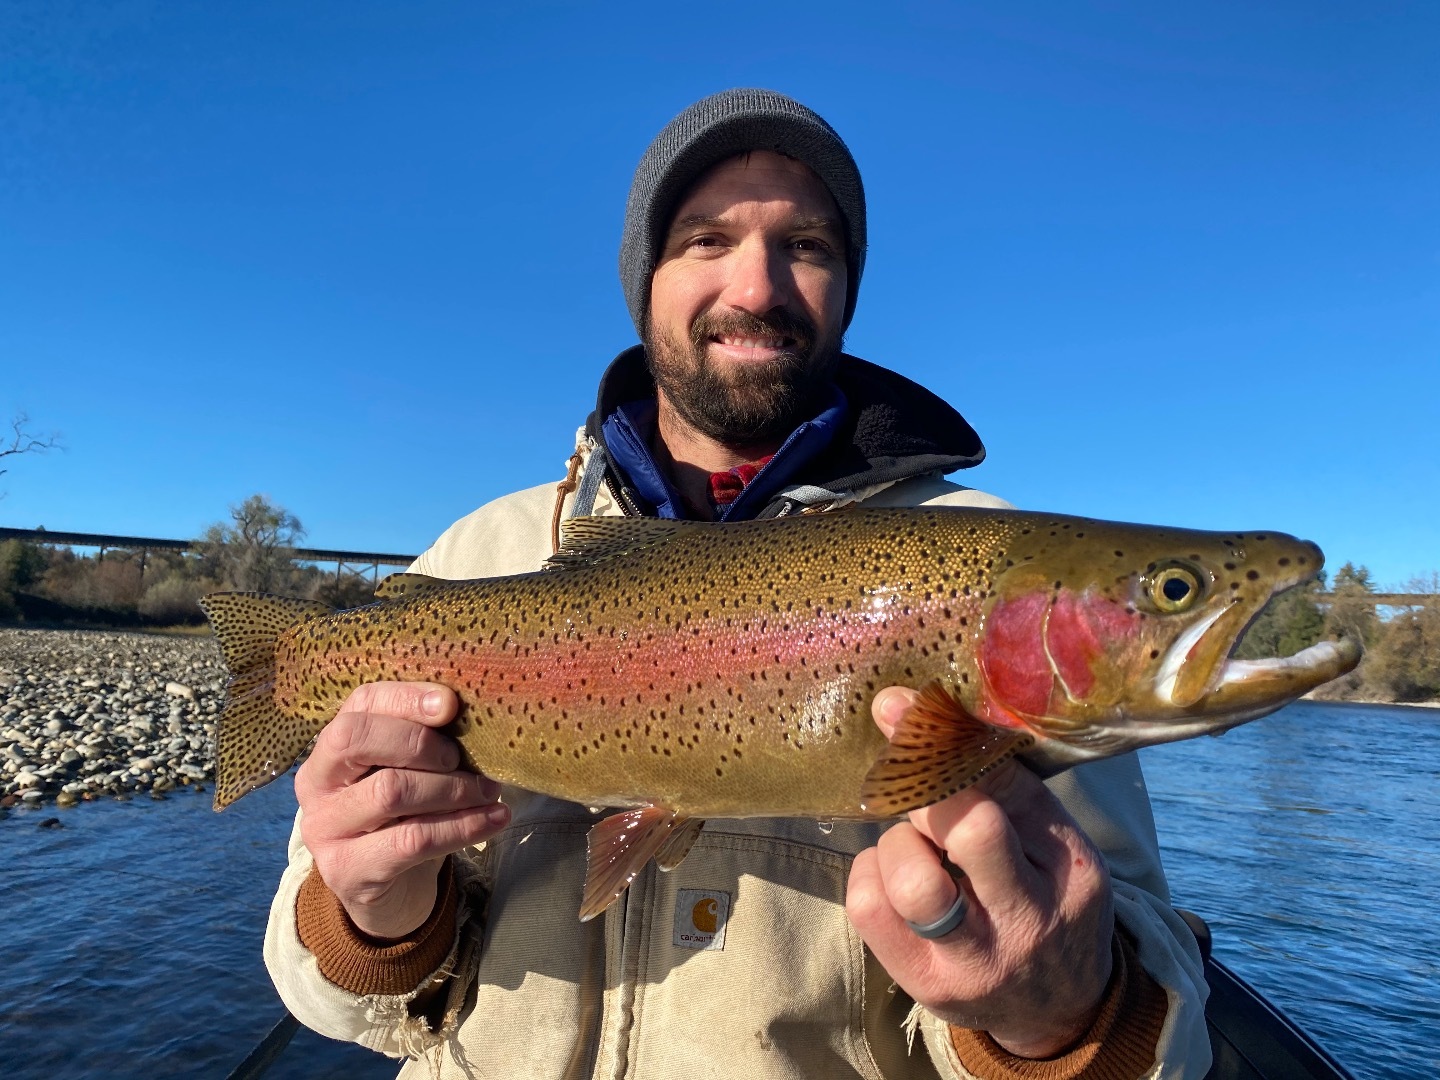 Sac River rainbow trout/steelhead fishing!